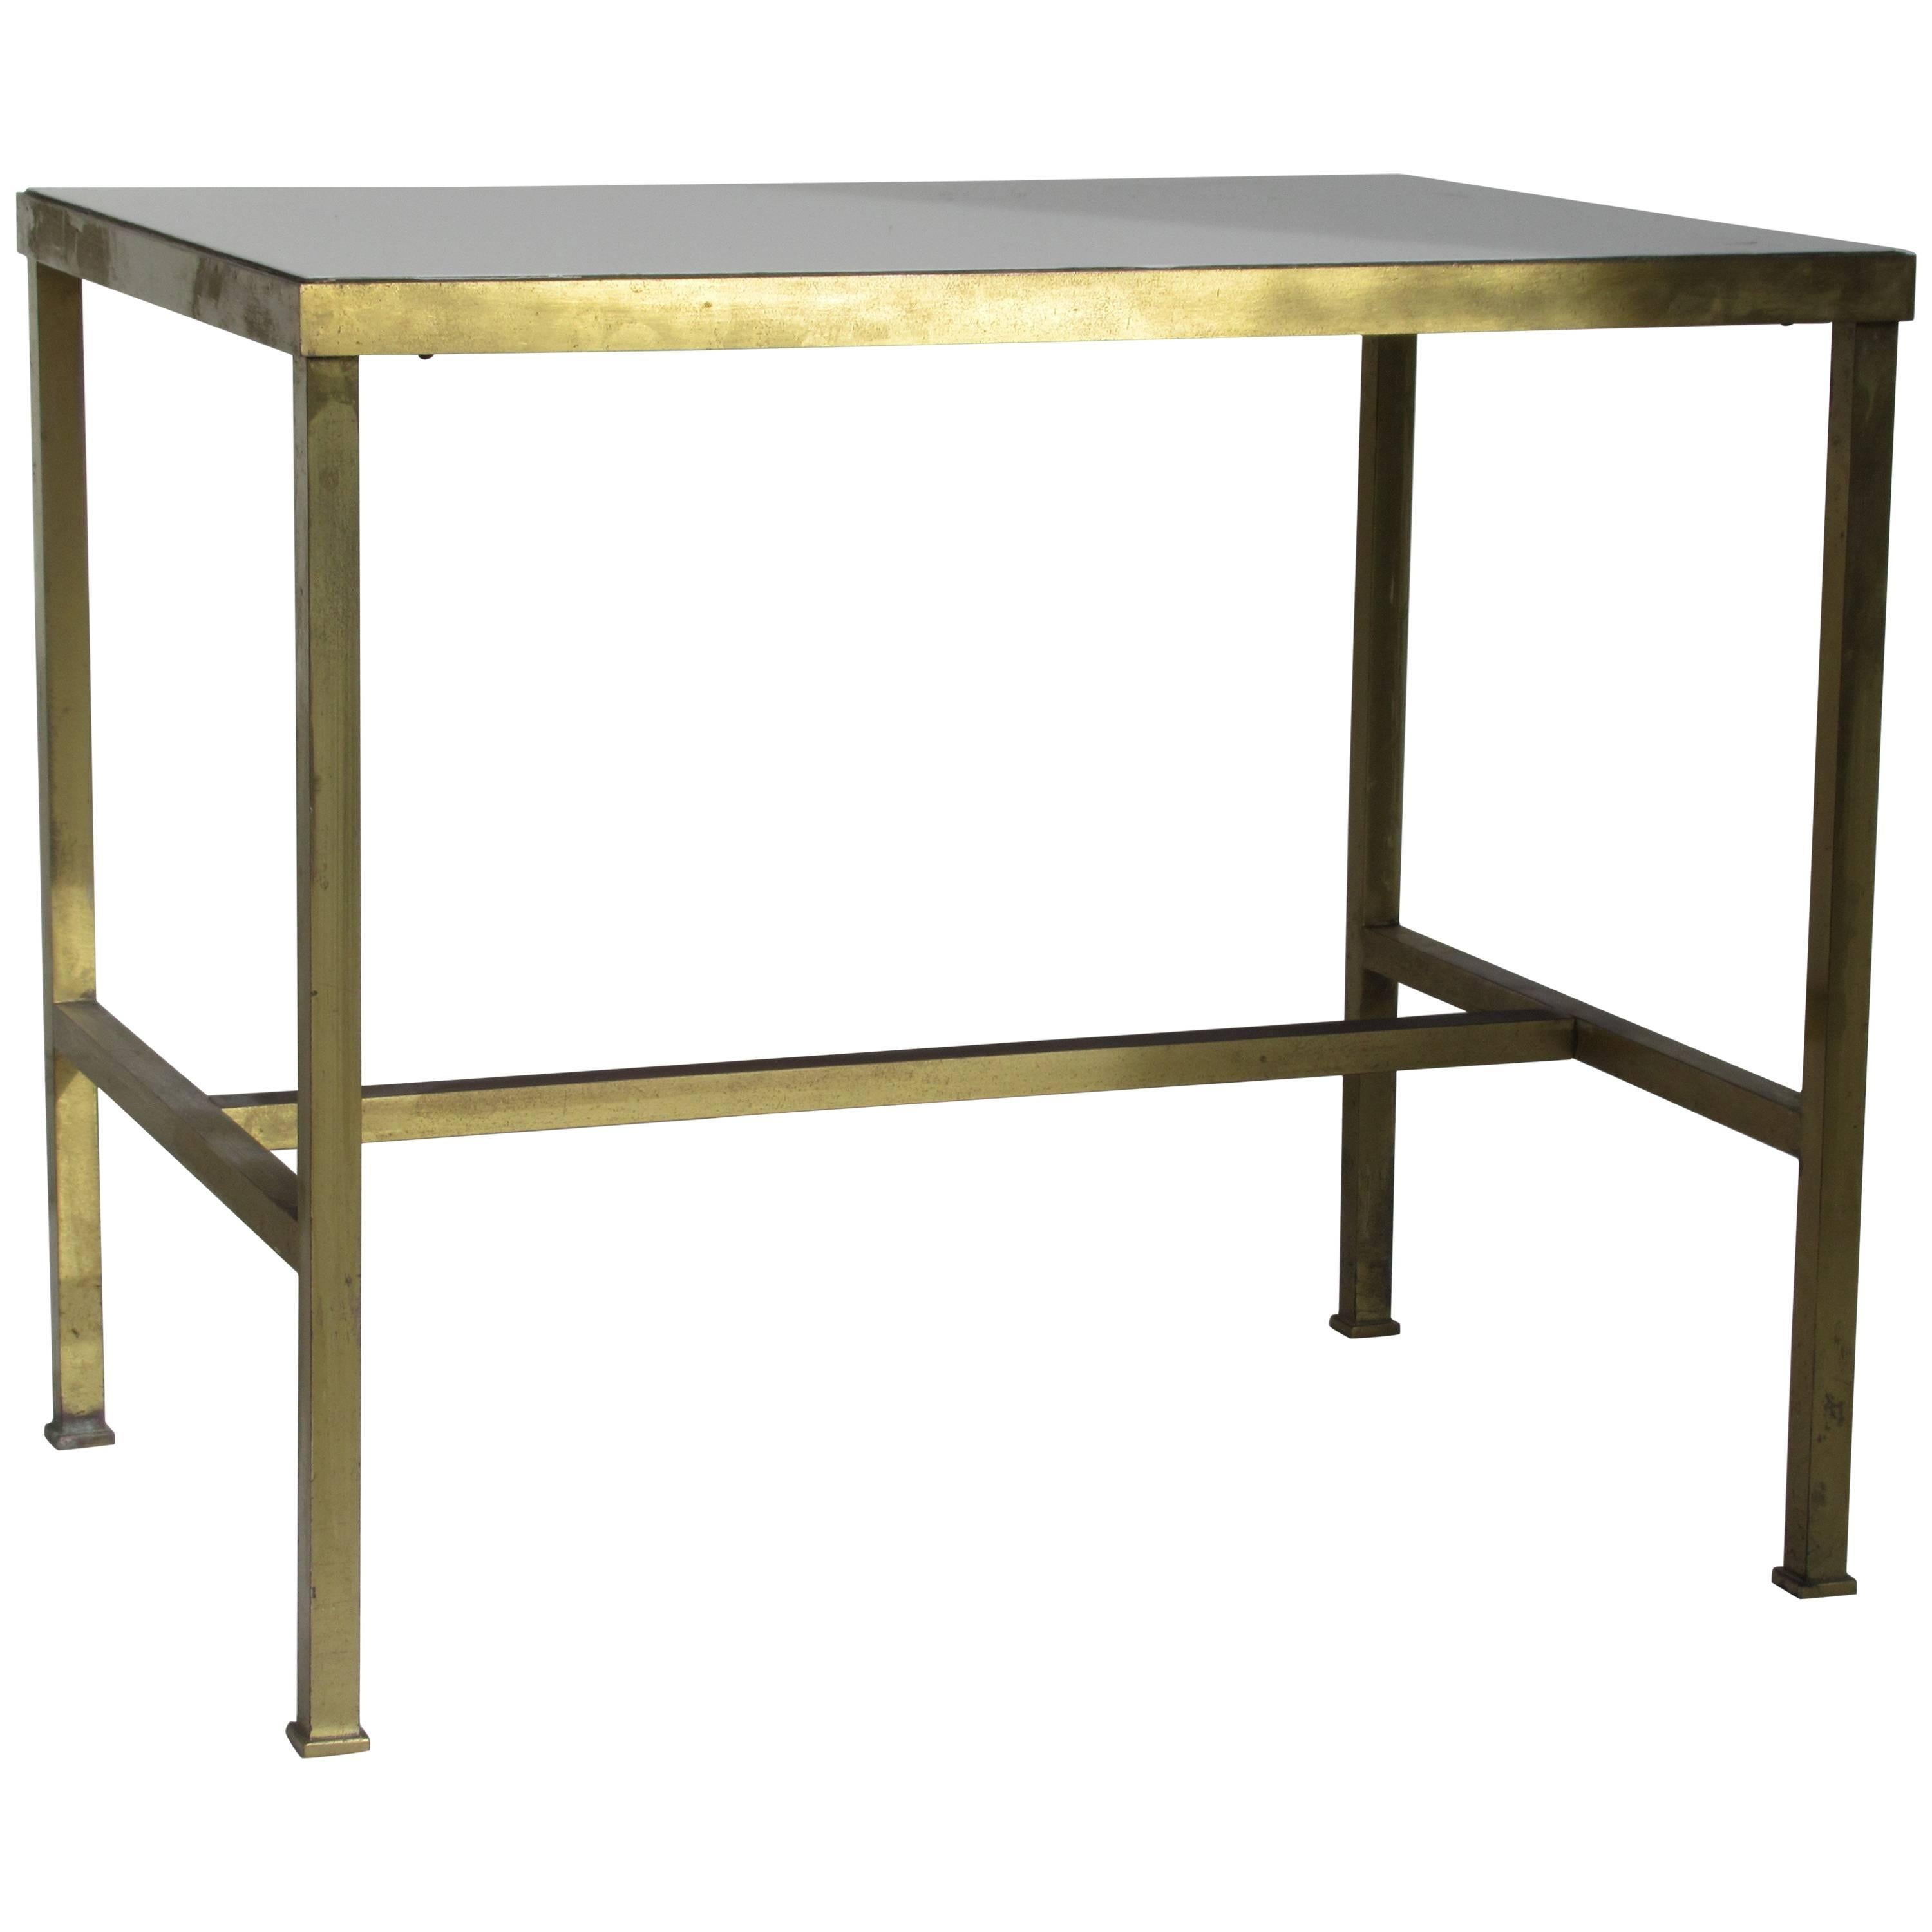  Brass and Vitrolite Table